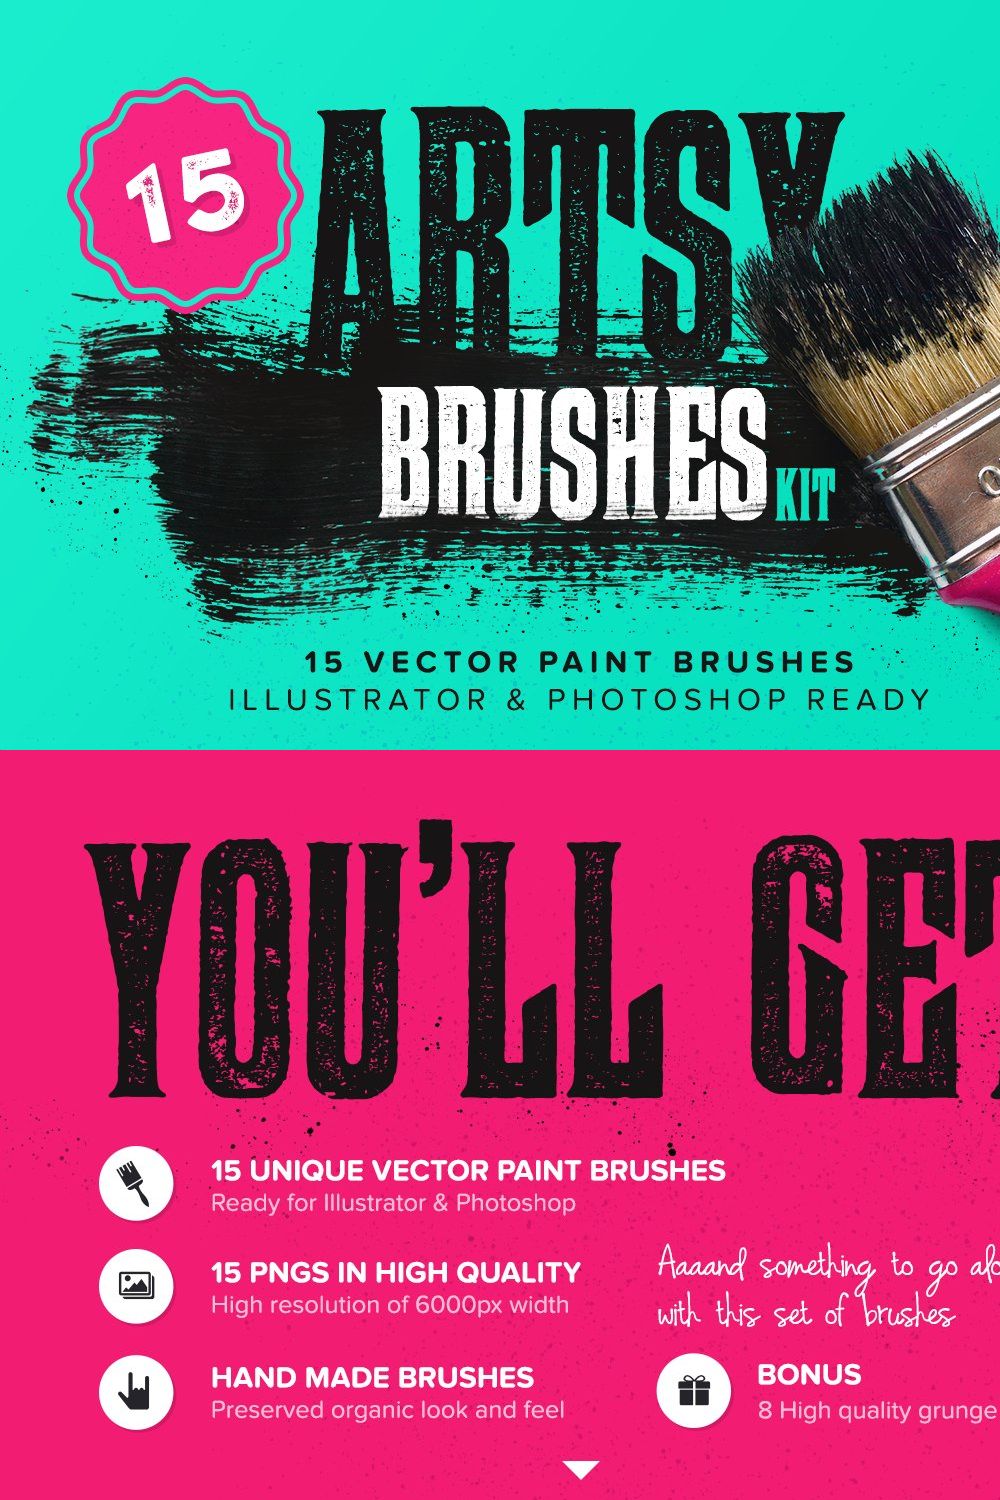 Artsy Paint Brushes Kit pinterest preview image.